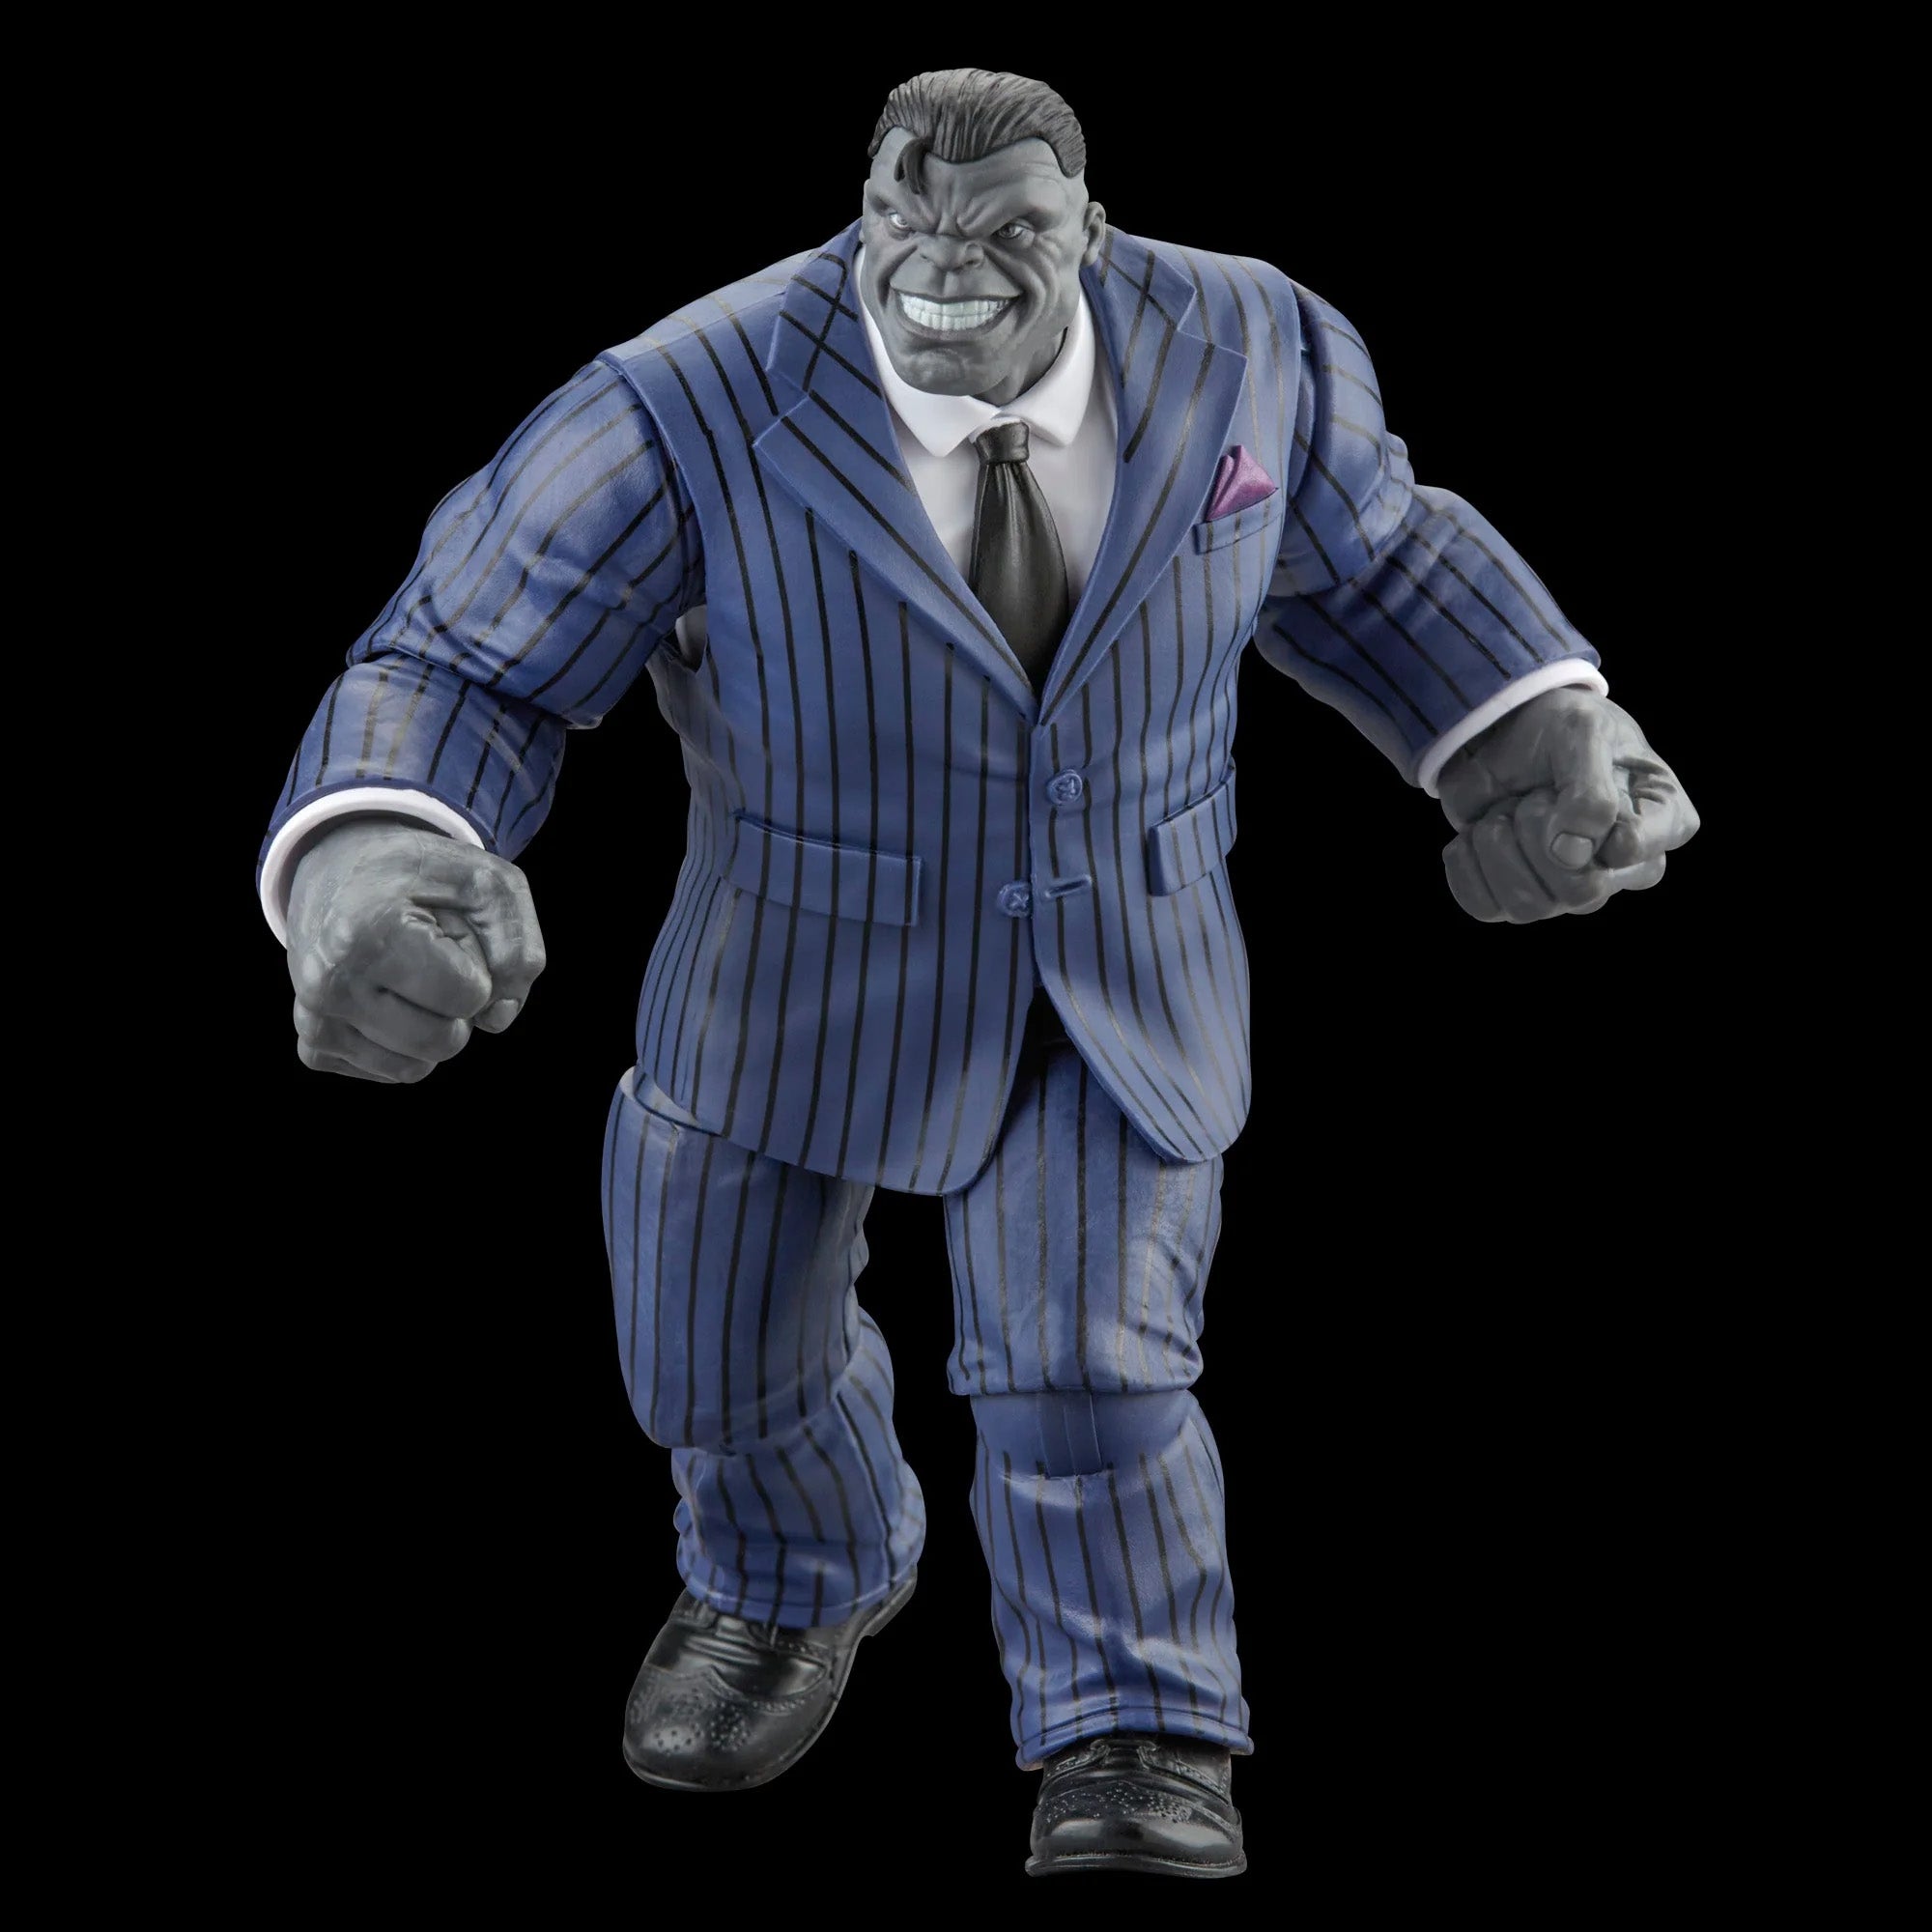 Hasbro - Marvel Legends - The Incredible Hulk - Joe Fixit - Marvelous Toys